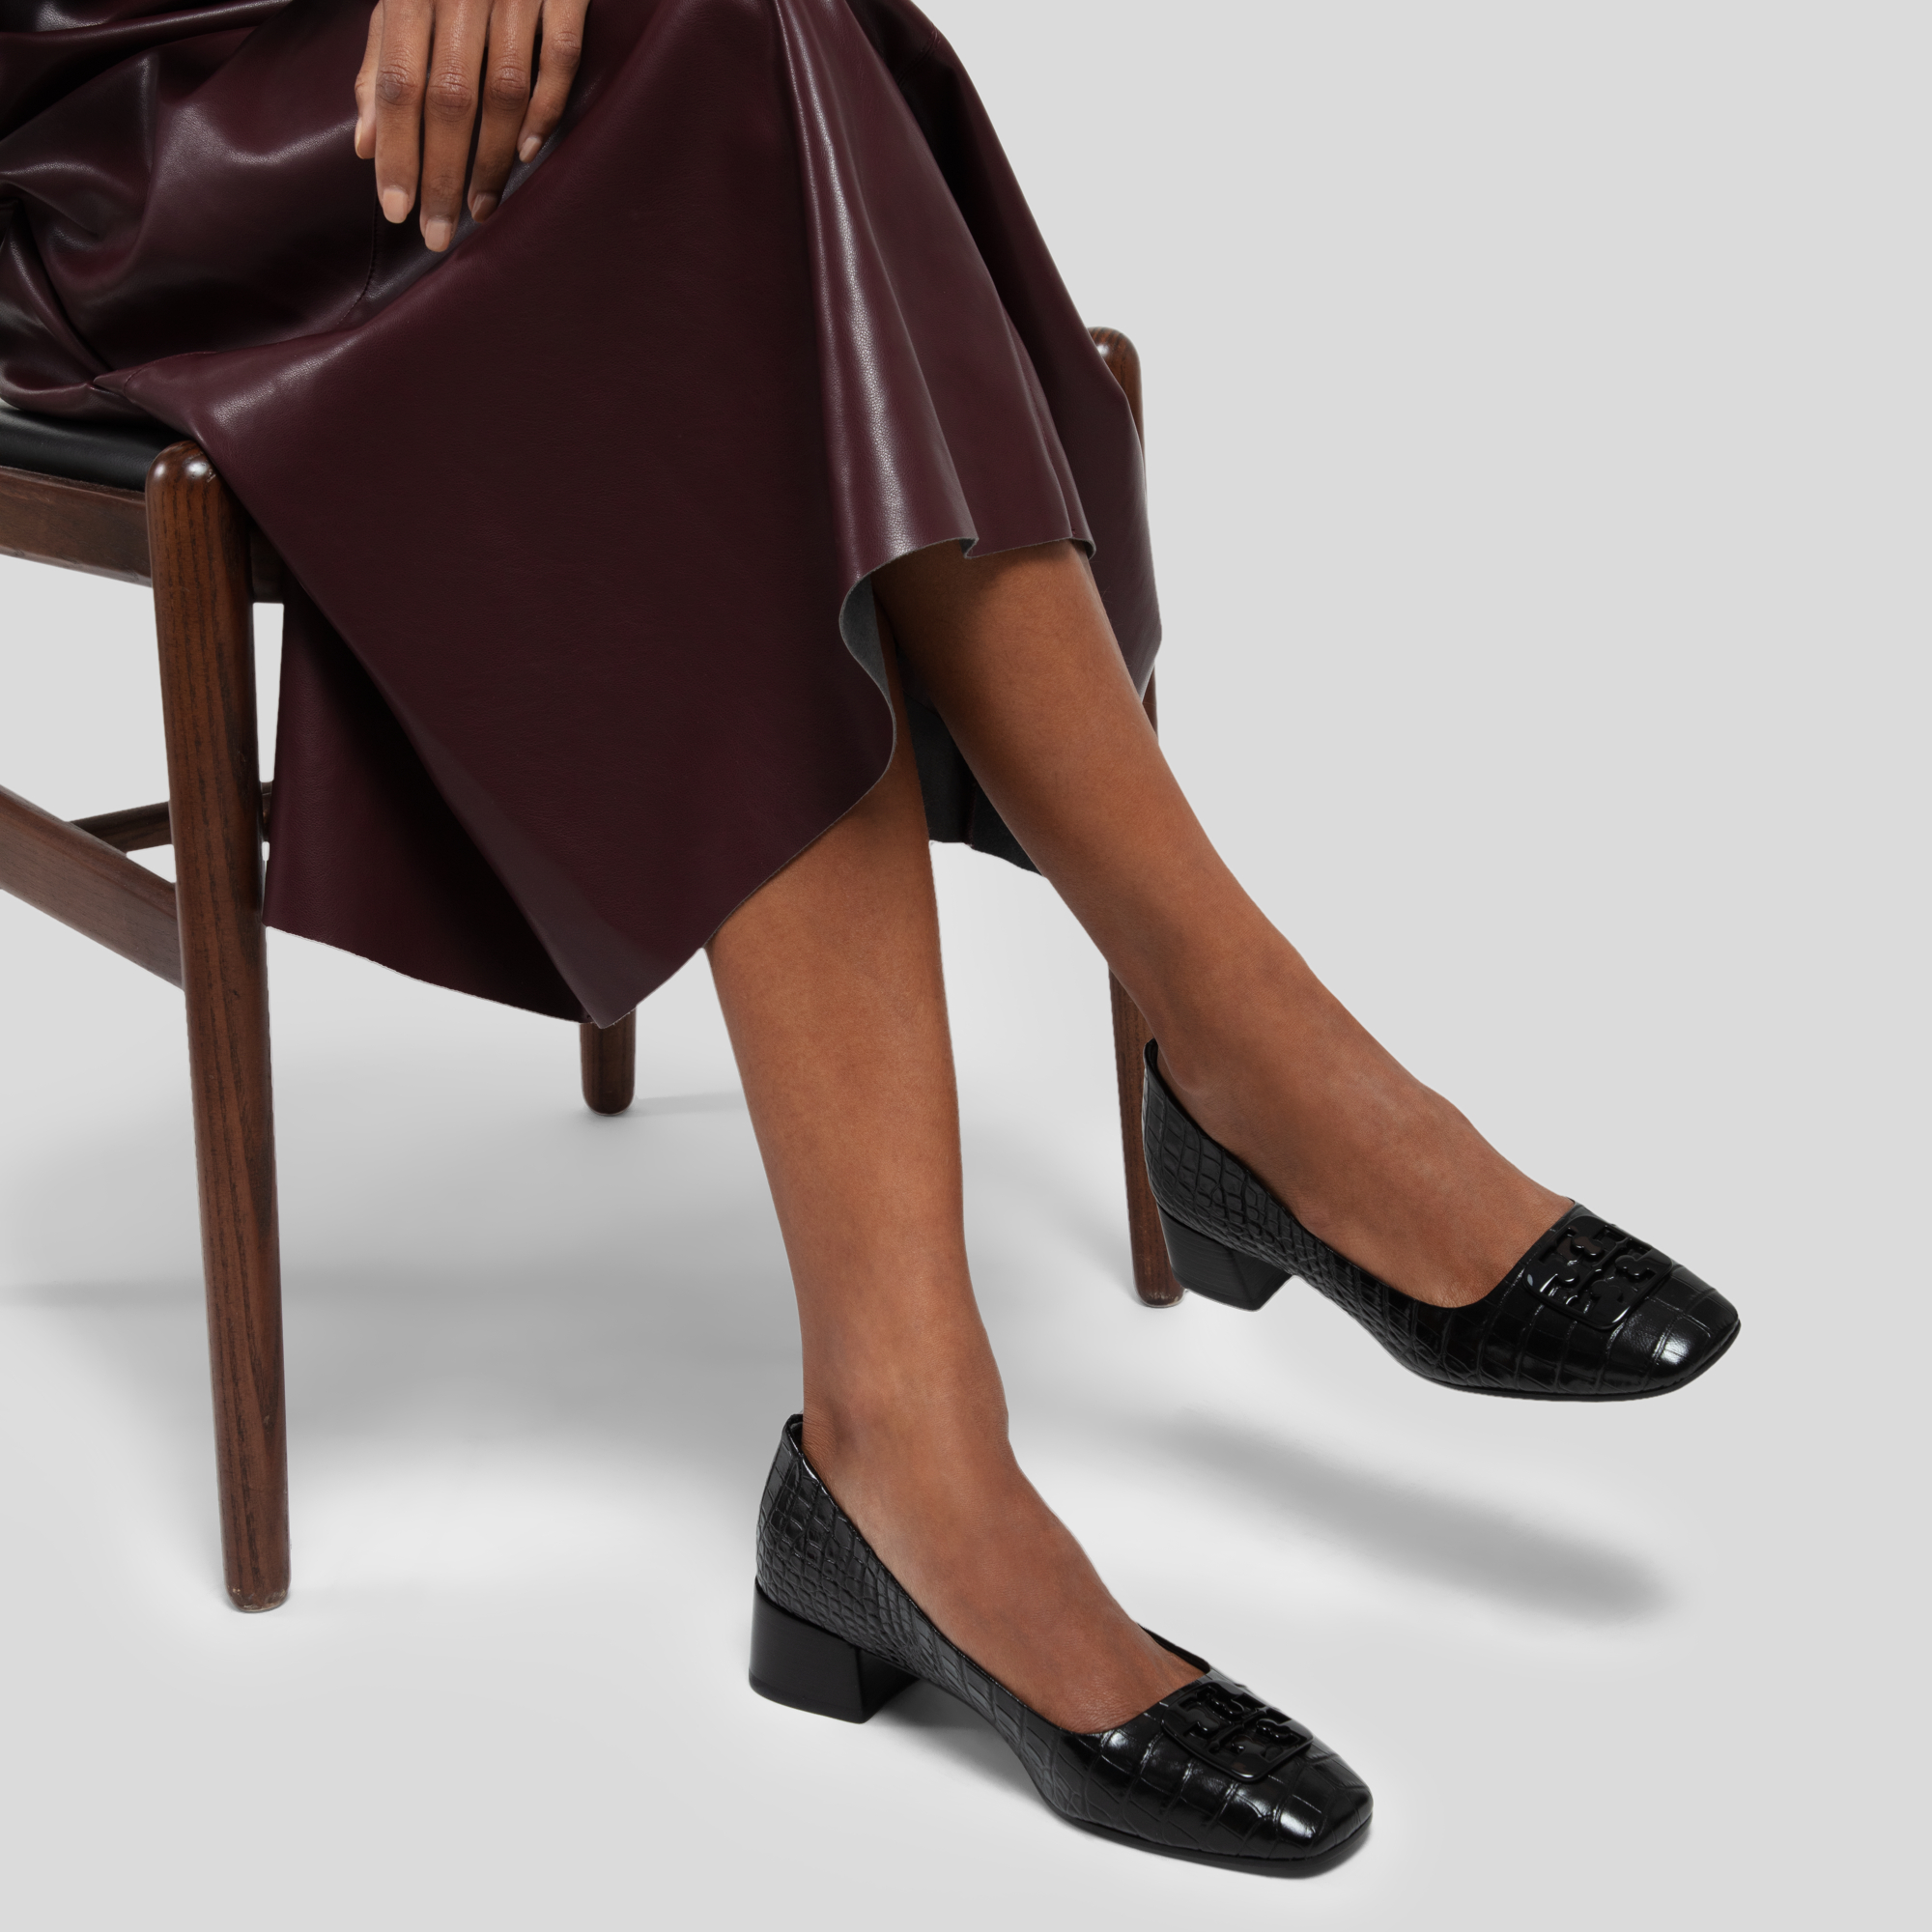 Georgia Pump : Women's Shoes, Heels